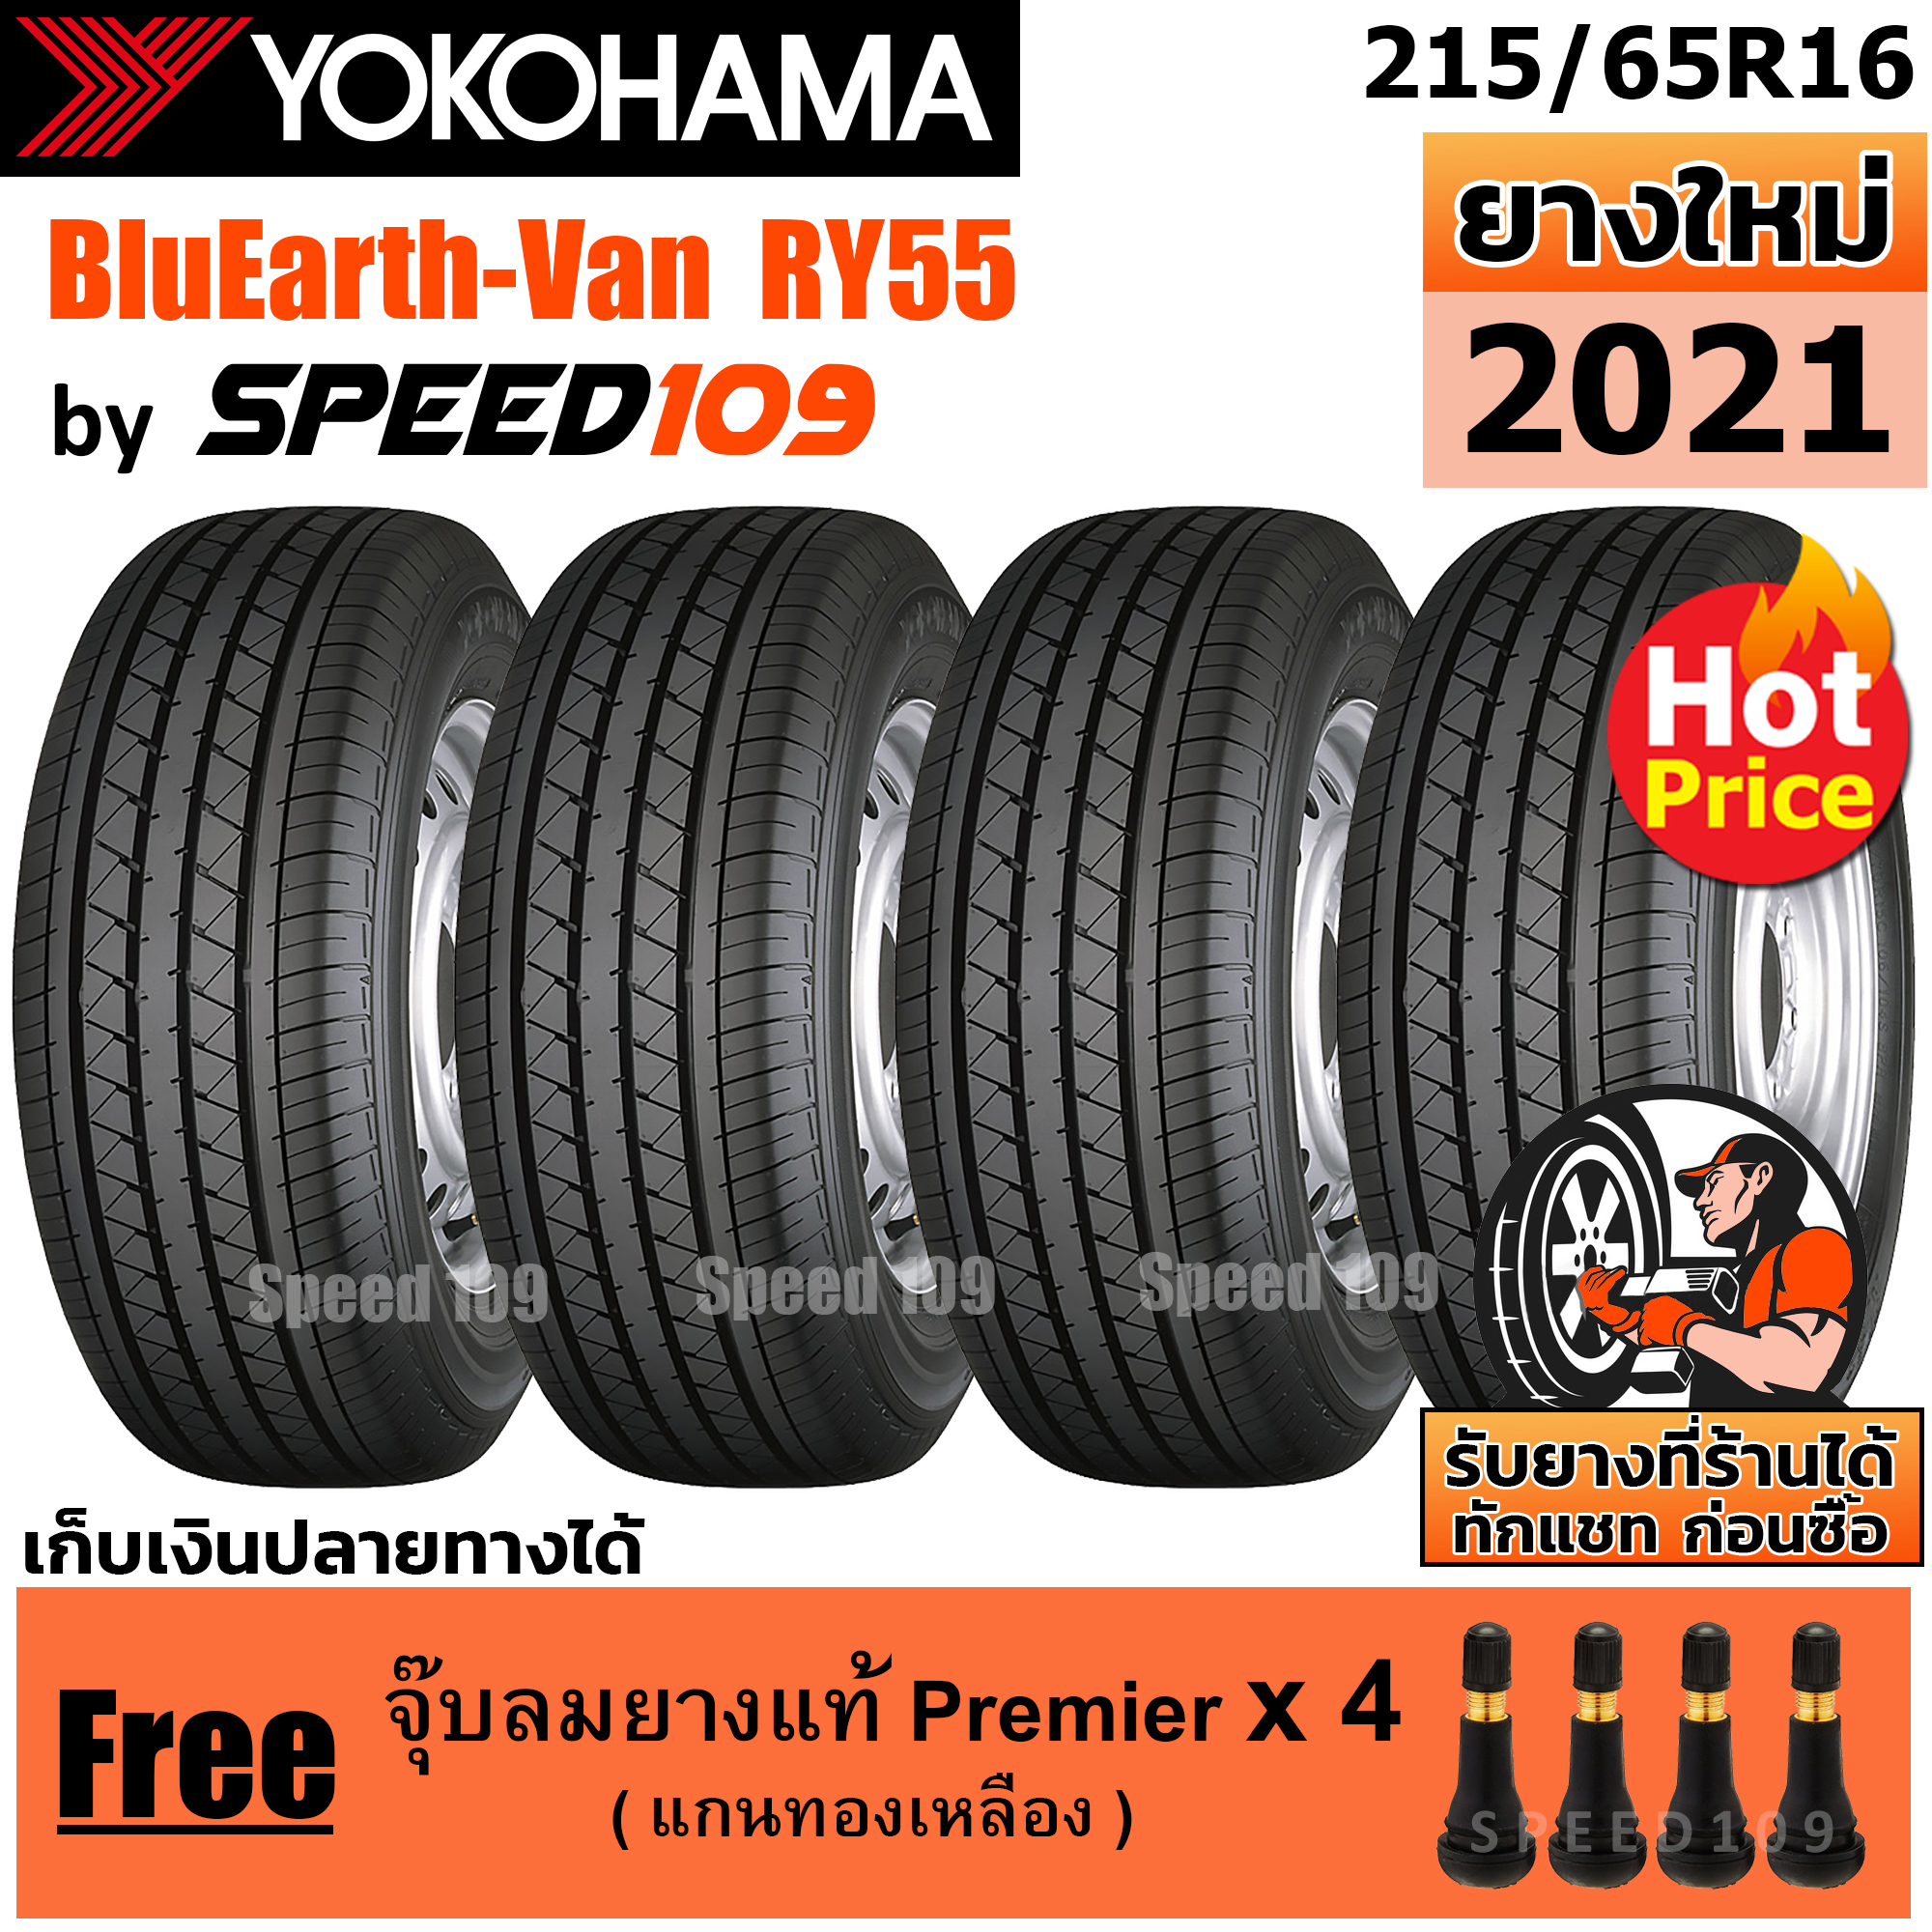 YOKOHAMA ยางรถยนต์ ขอบ 16 ขนาด 215/65R16 รุ่น BluEarth-Van RY55 - 4 เส้น (ปี 2021)